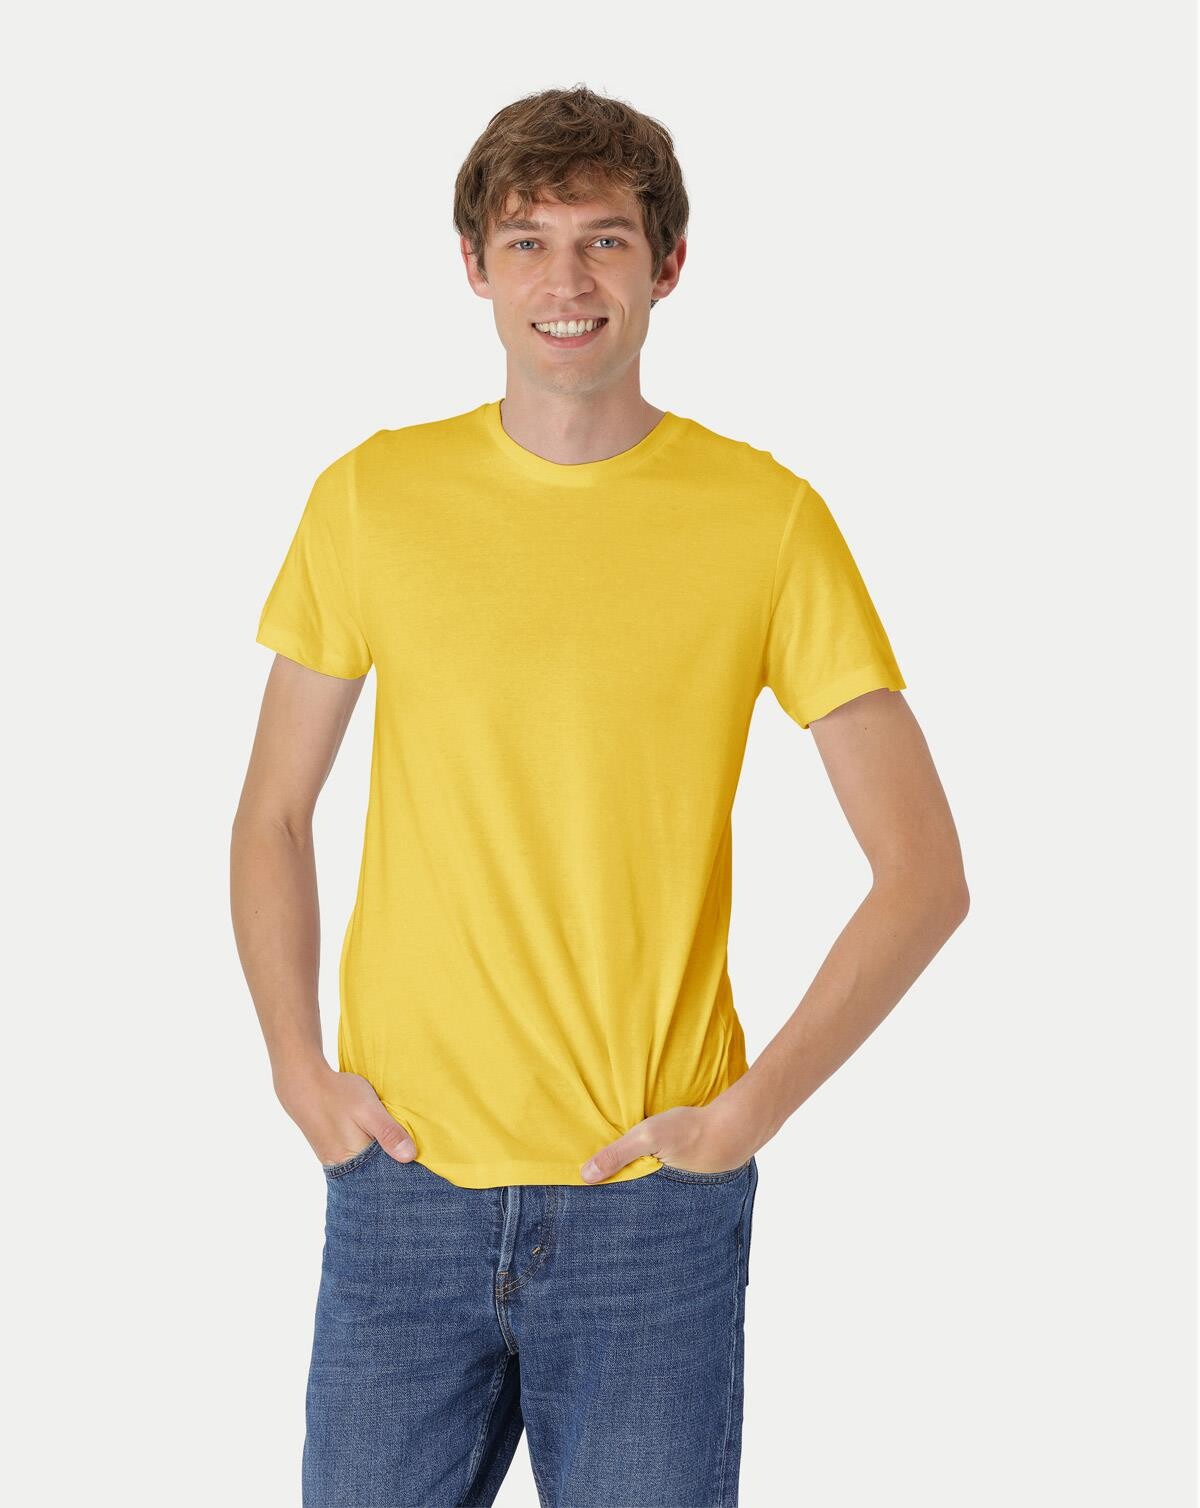 Neutral Økologisk T-shirt til - Tætsiddende (Gul, M)